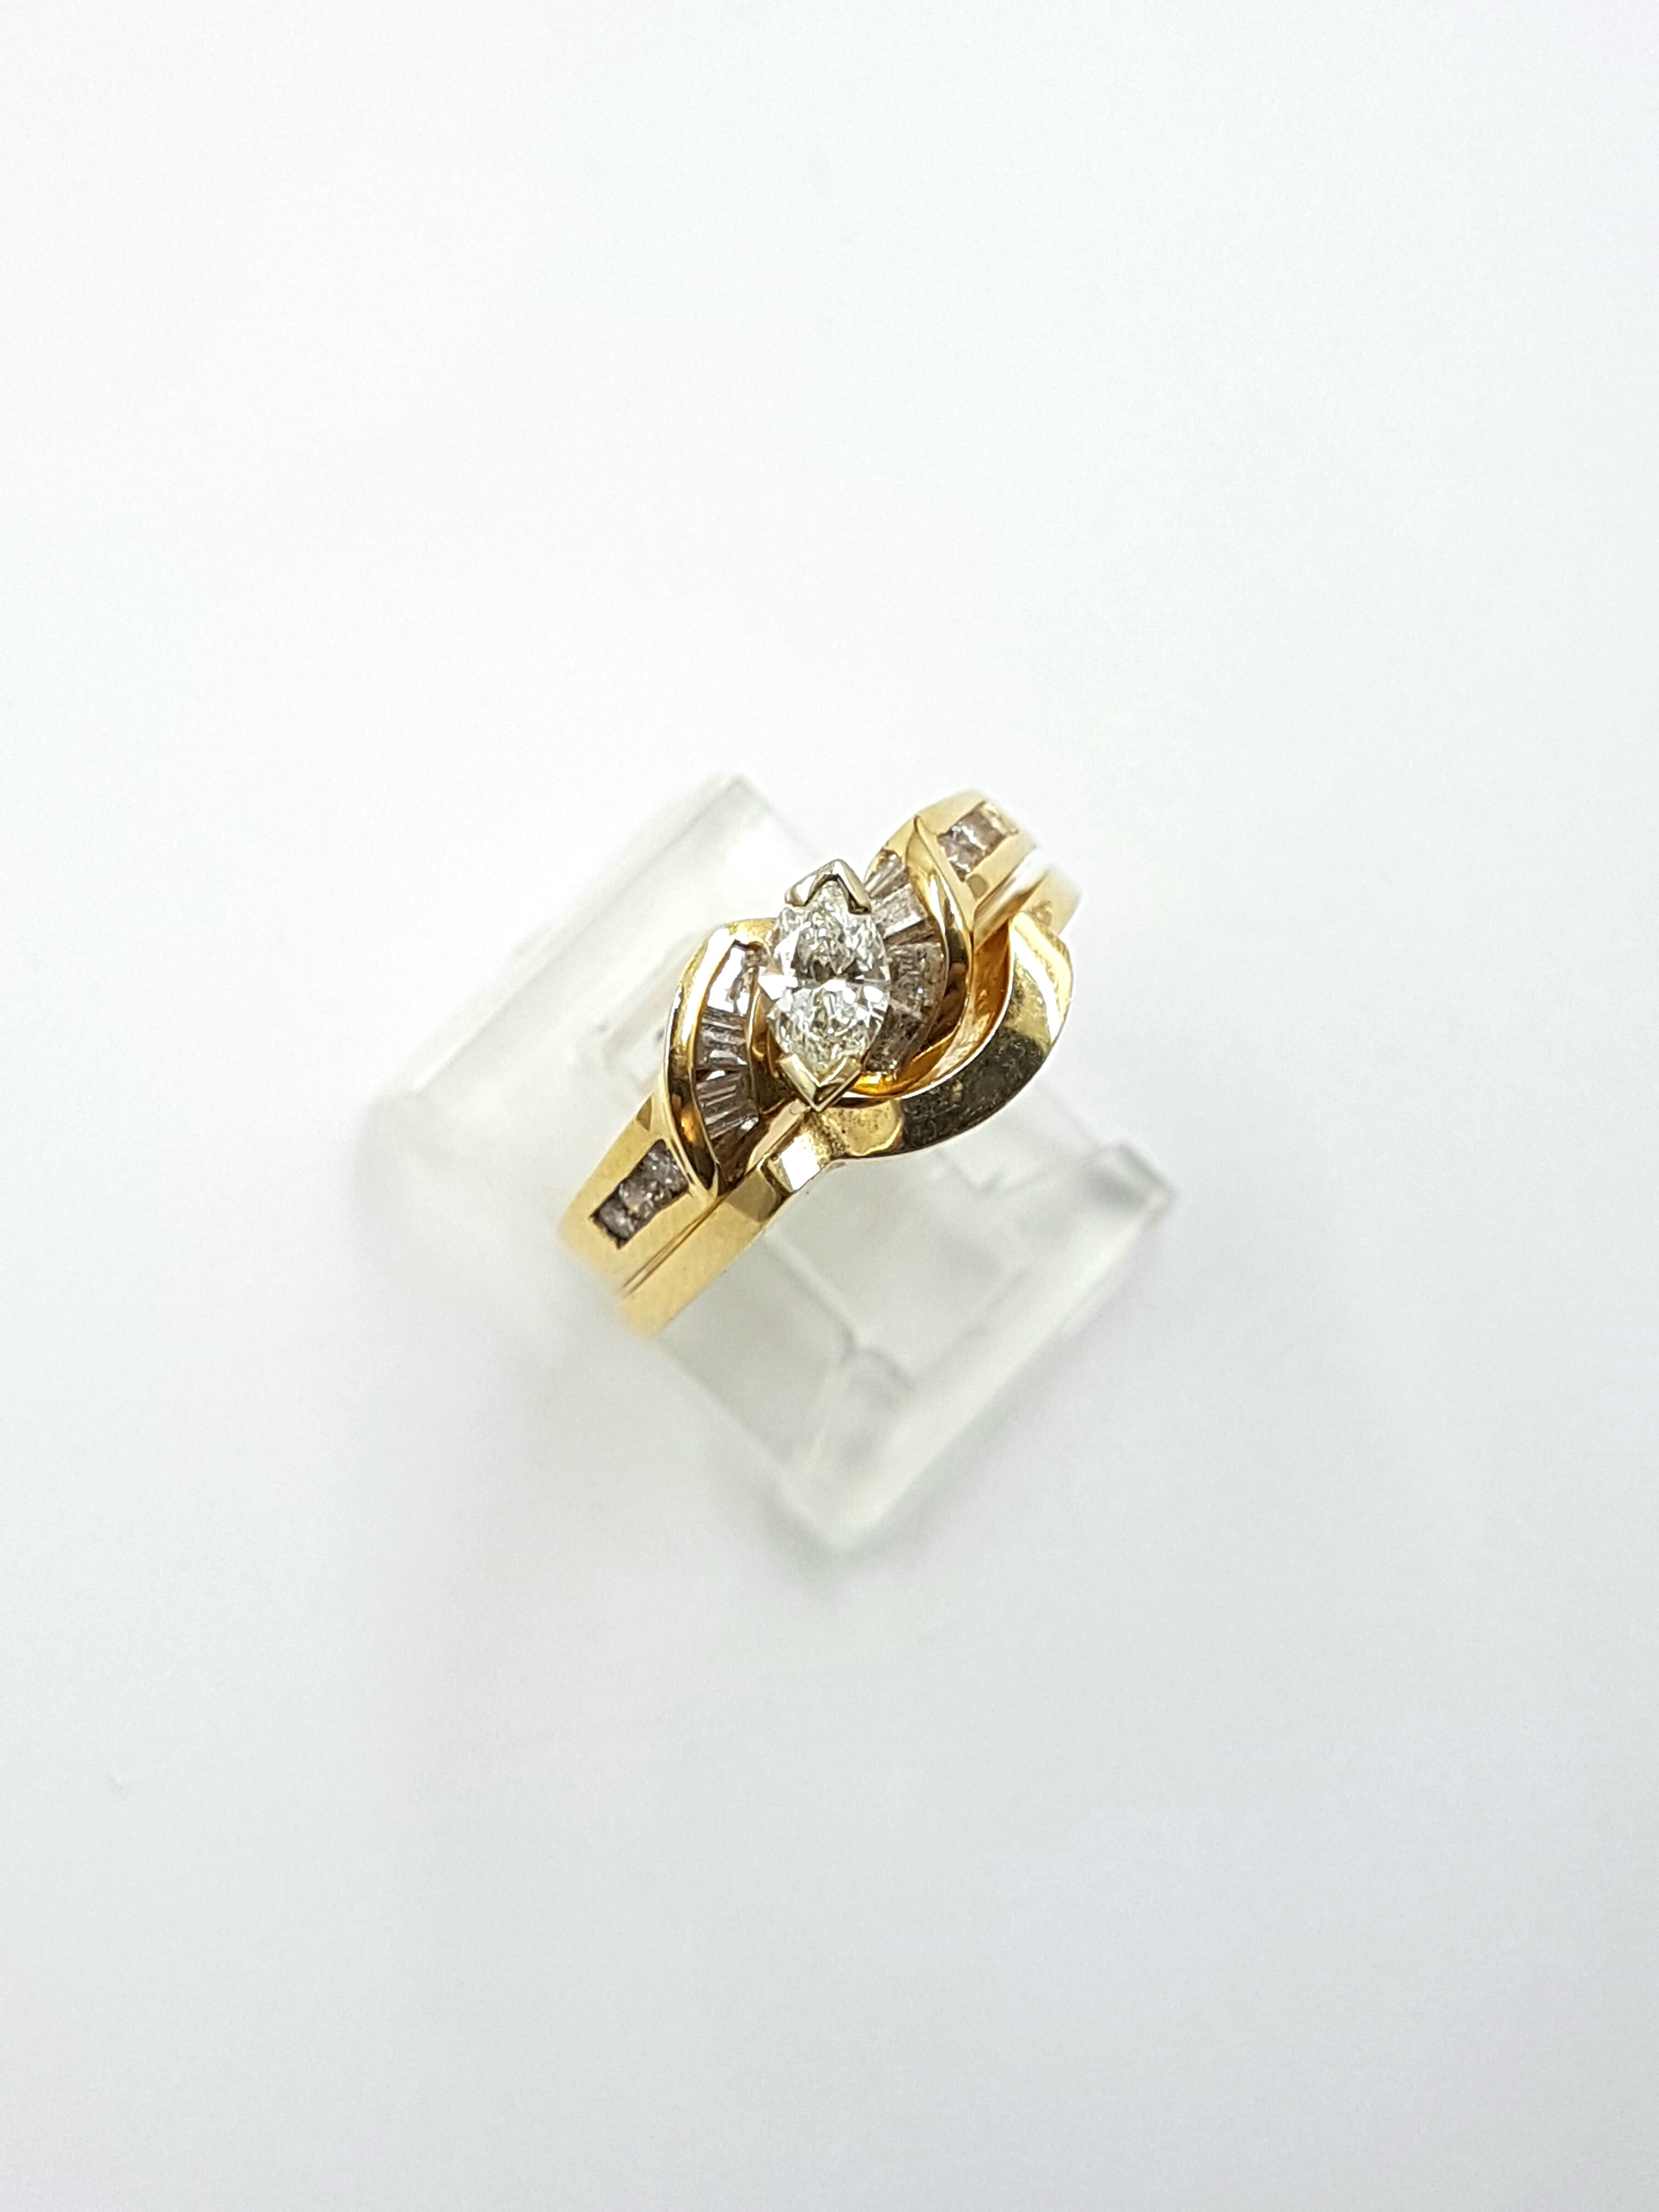 Engagement Ring & Wedding Band
14K Yellow Gold
0.80ct Total
Regular Price $7225
SALE $1650
Ref: BF350+W